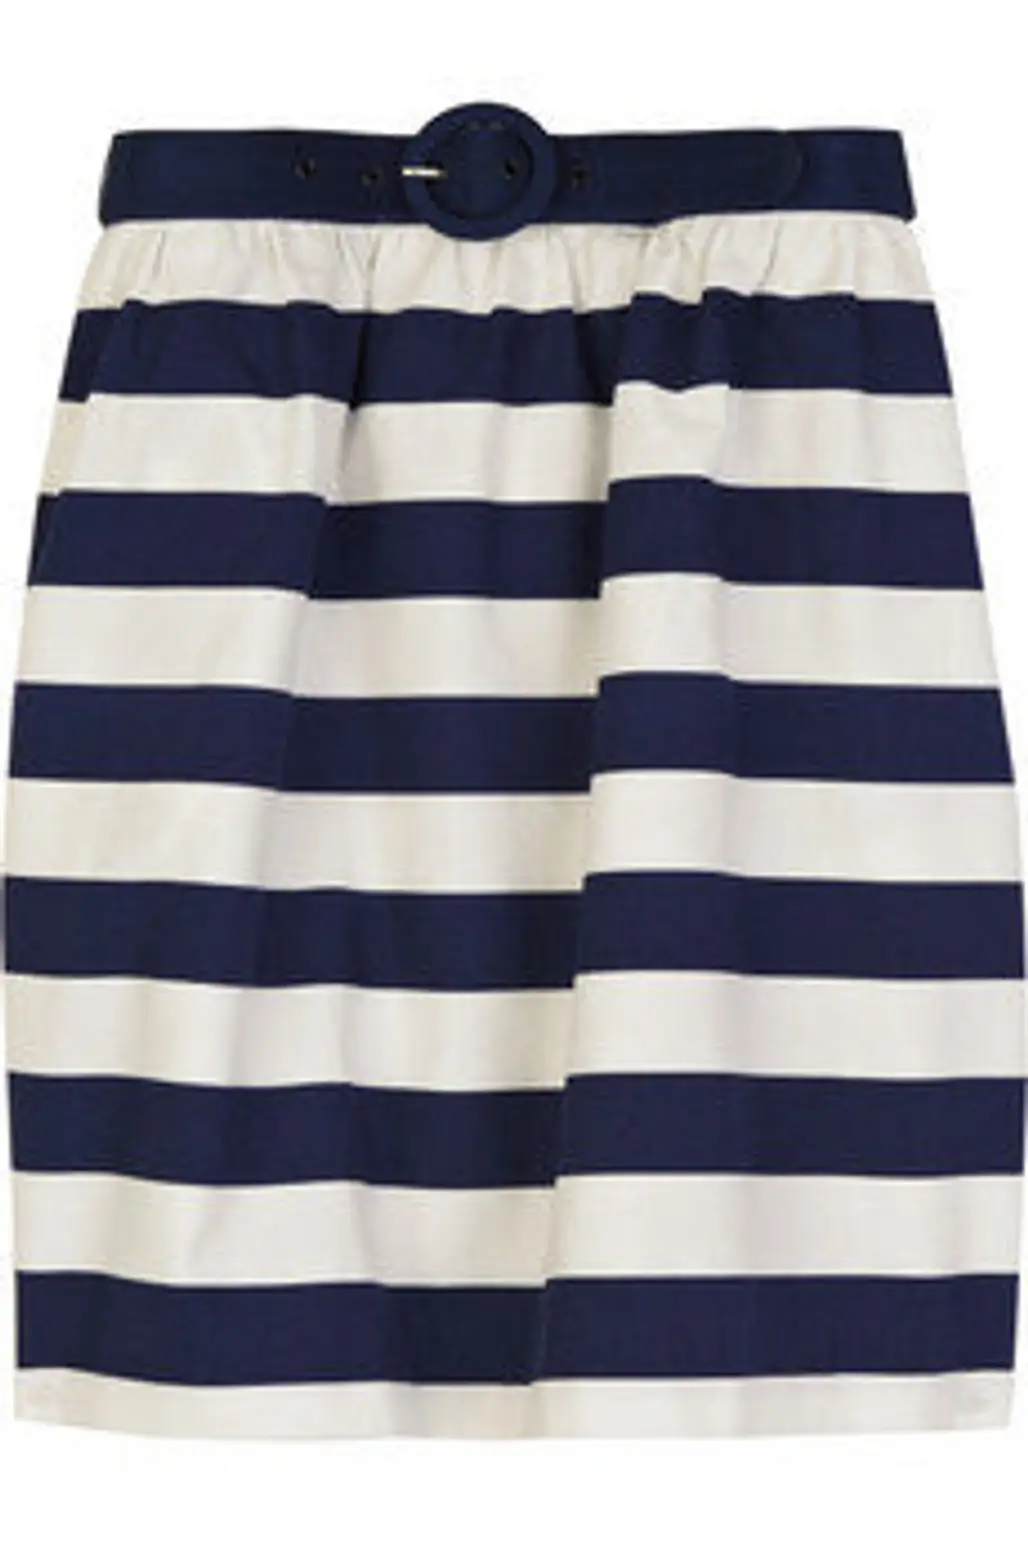 1. Alice + Olivia Striped Cotton Skirt